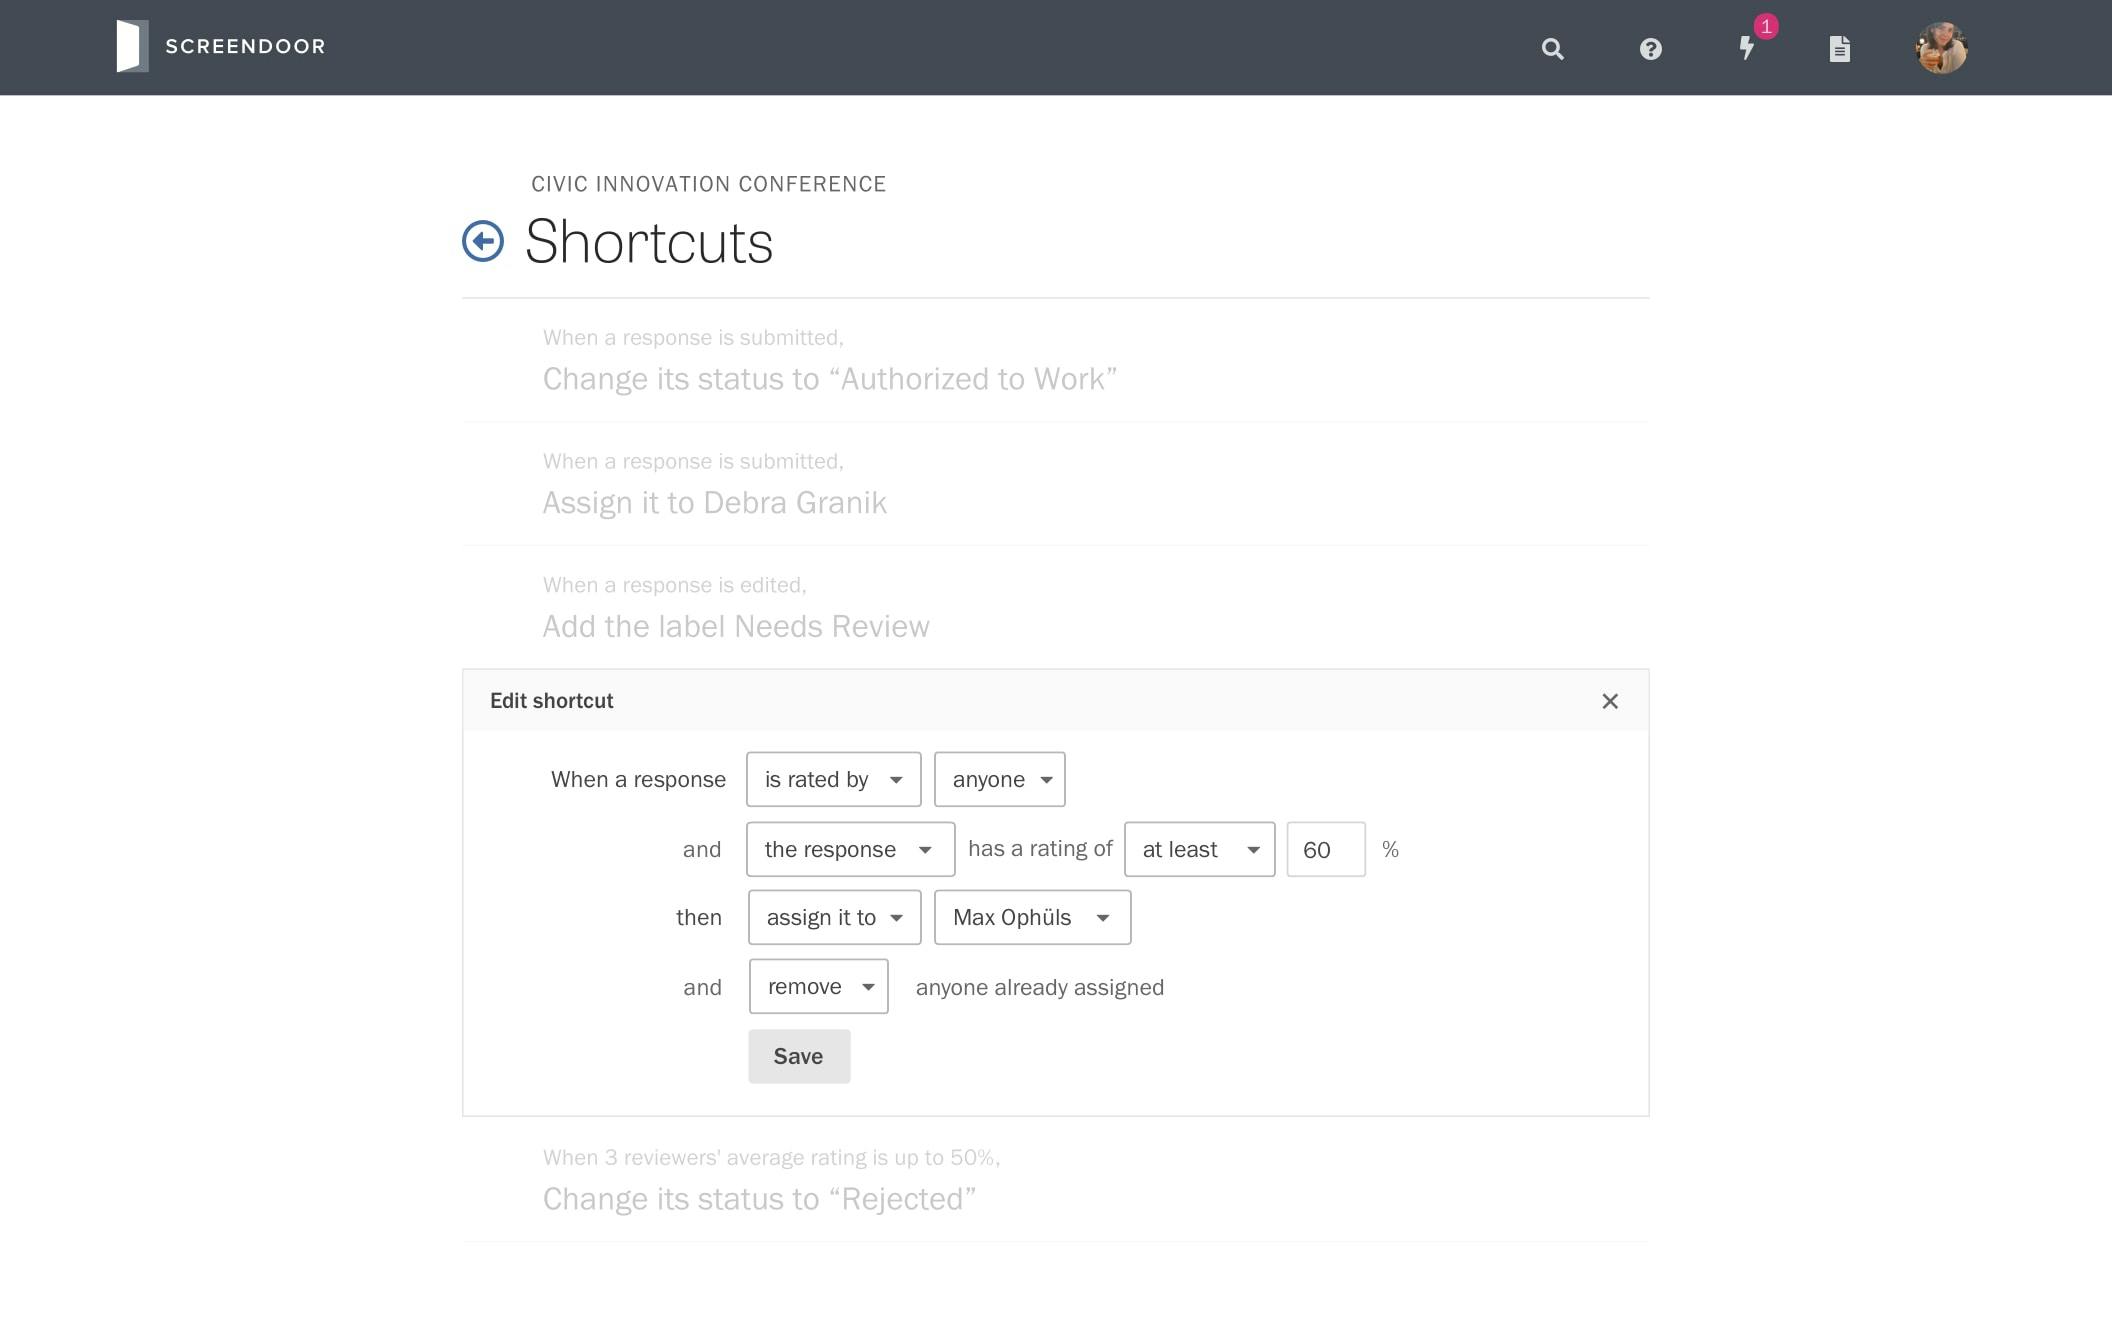 Screenshots of Screendoor's shortcut editor and activity feed.